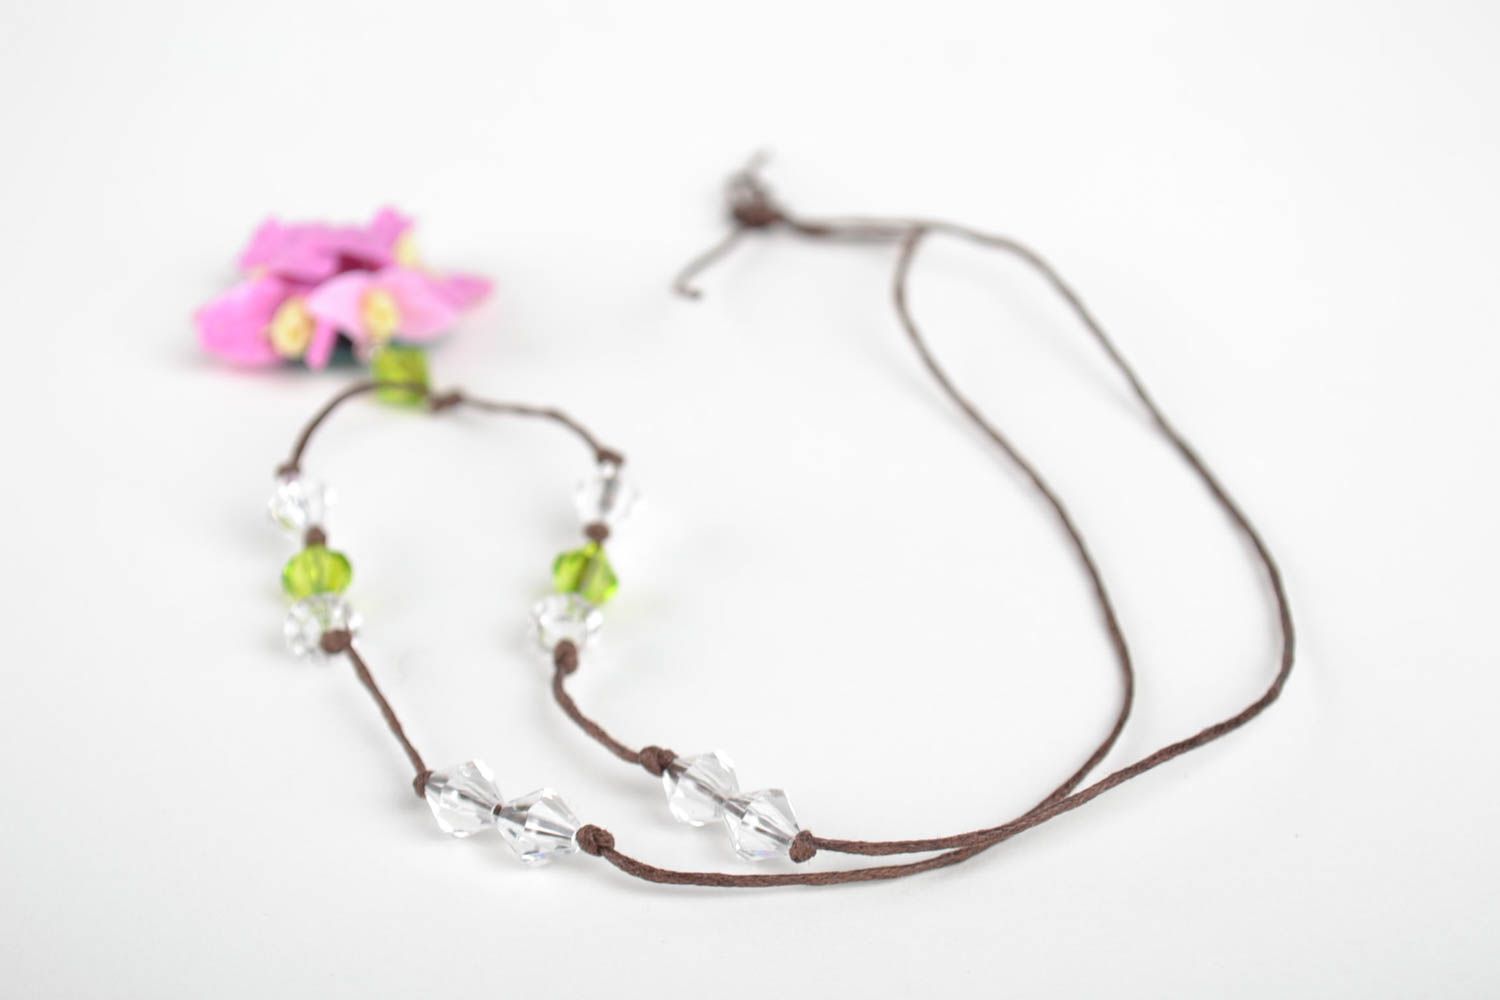 Flower necklace handmade jewelry fashion jewelry polymer clay pendant necklace photo 4